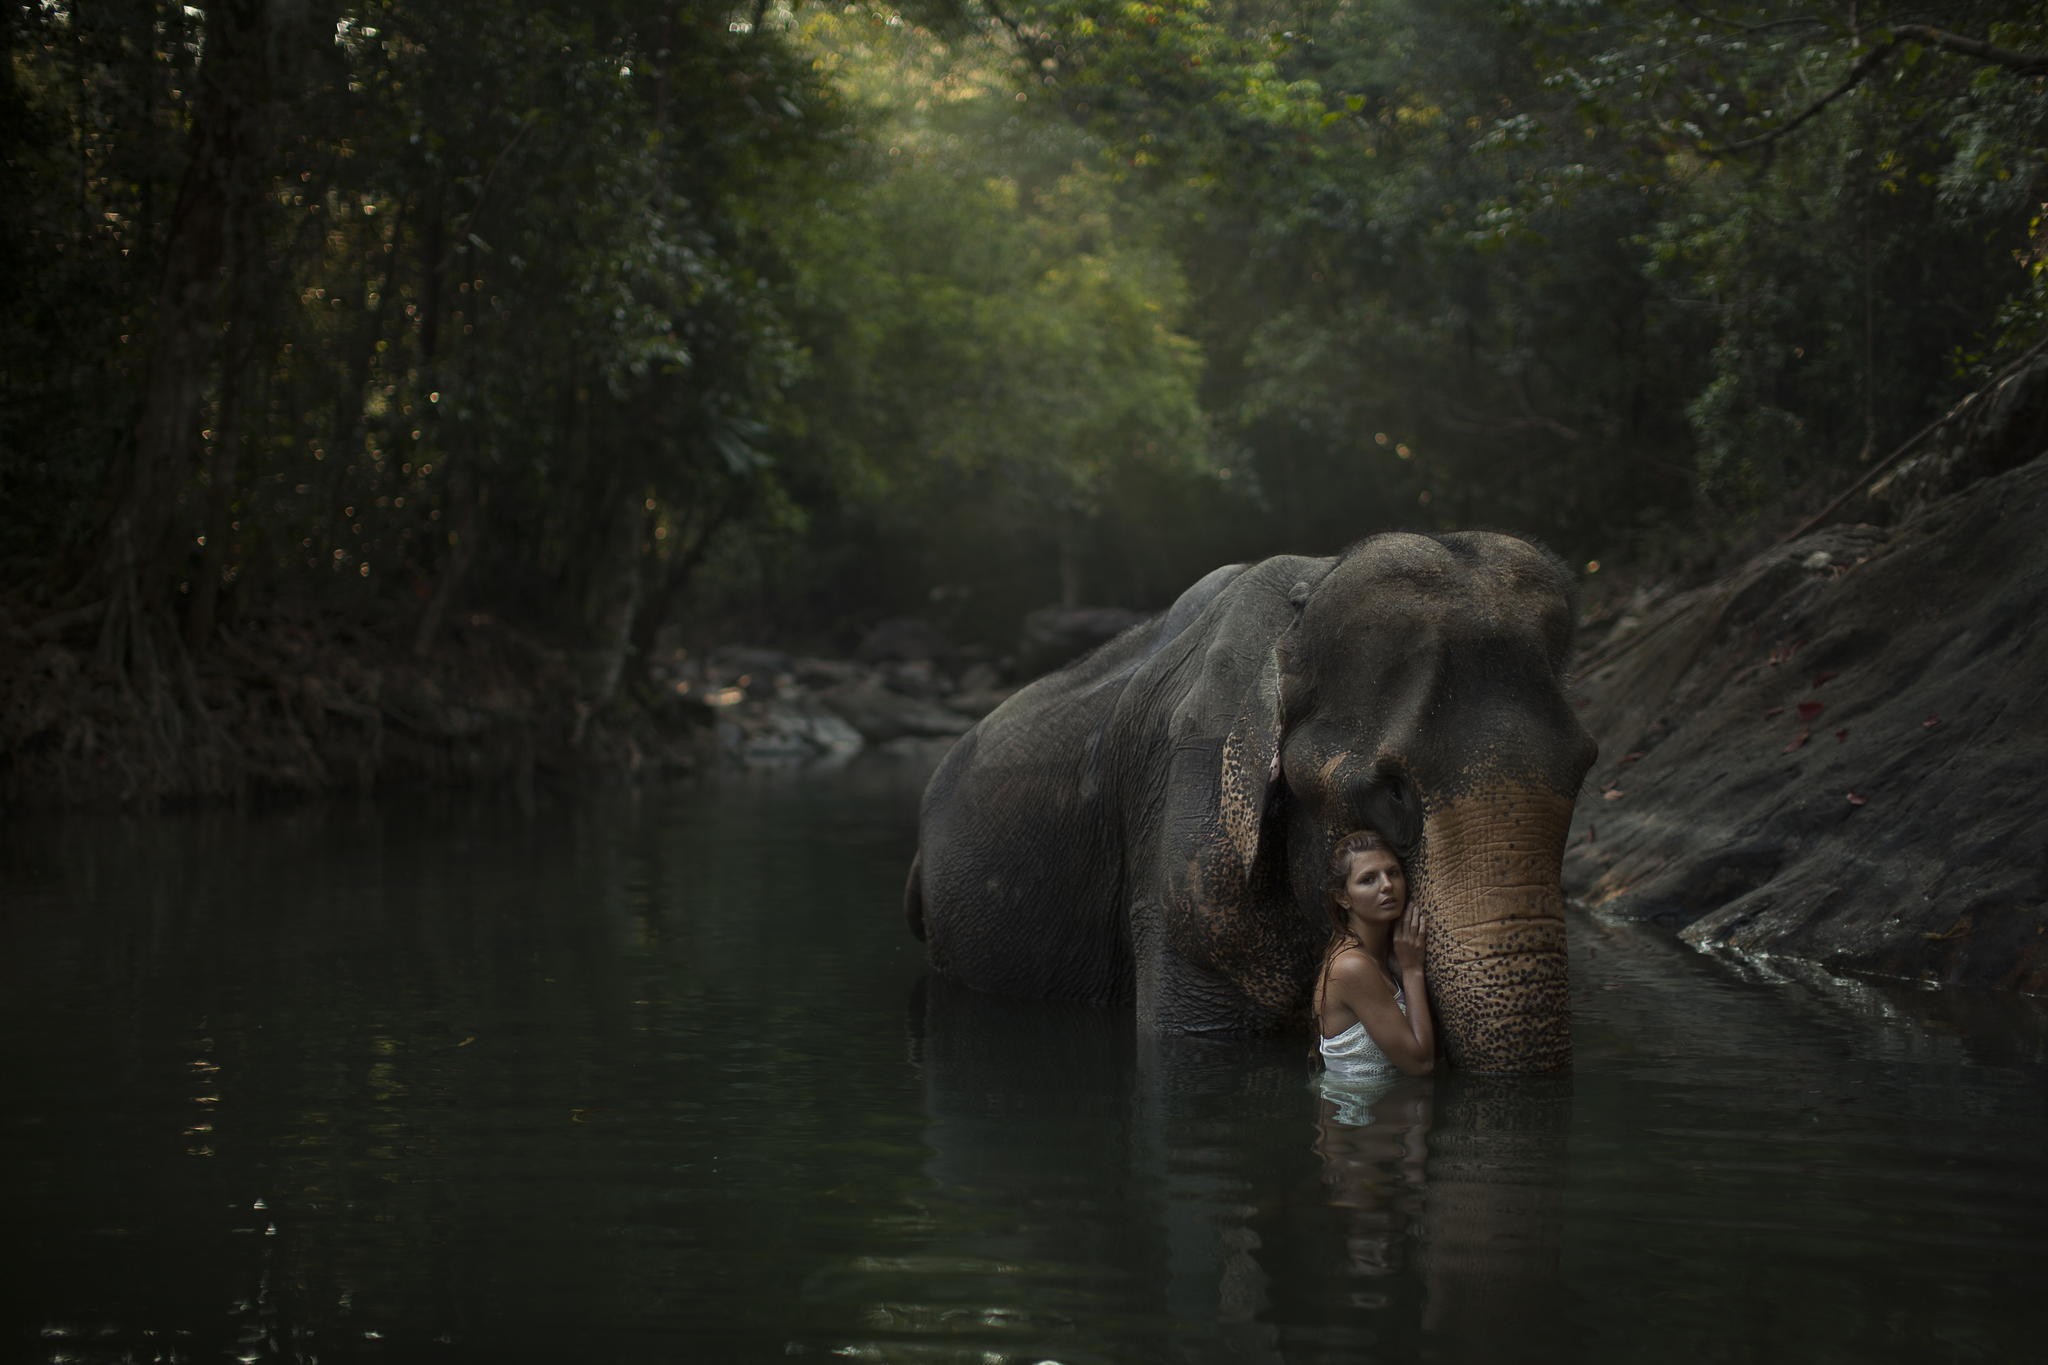 People 2048x1365 women model brunette women outdoors nature water elephant wet animals trees forest jungle river